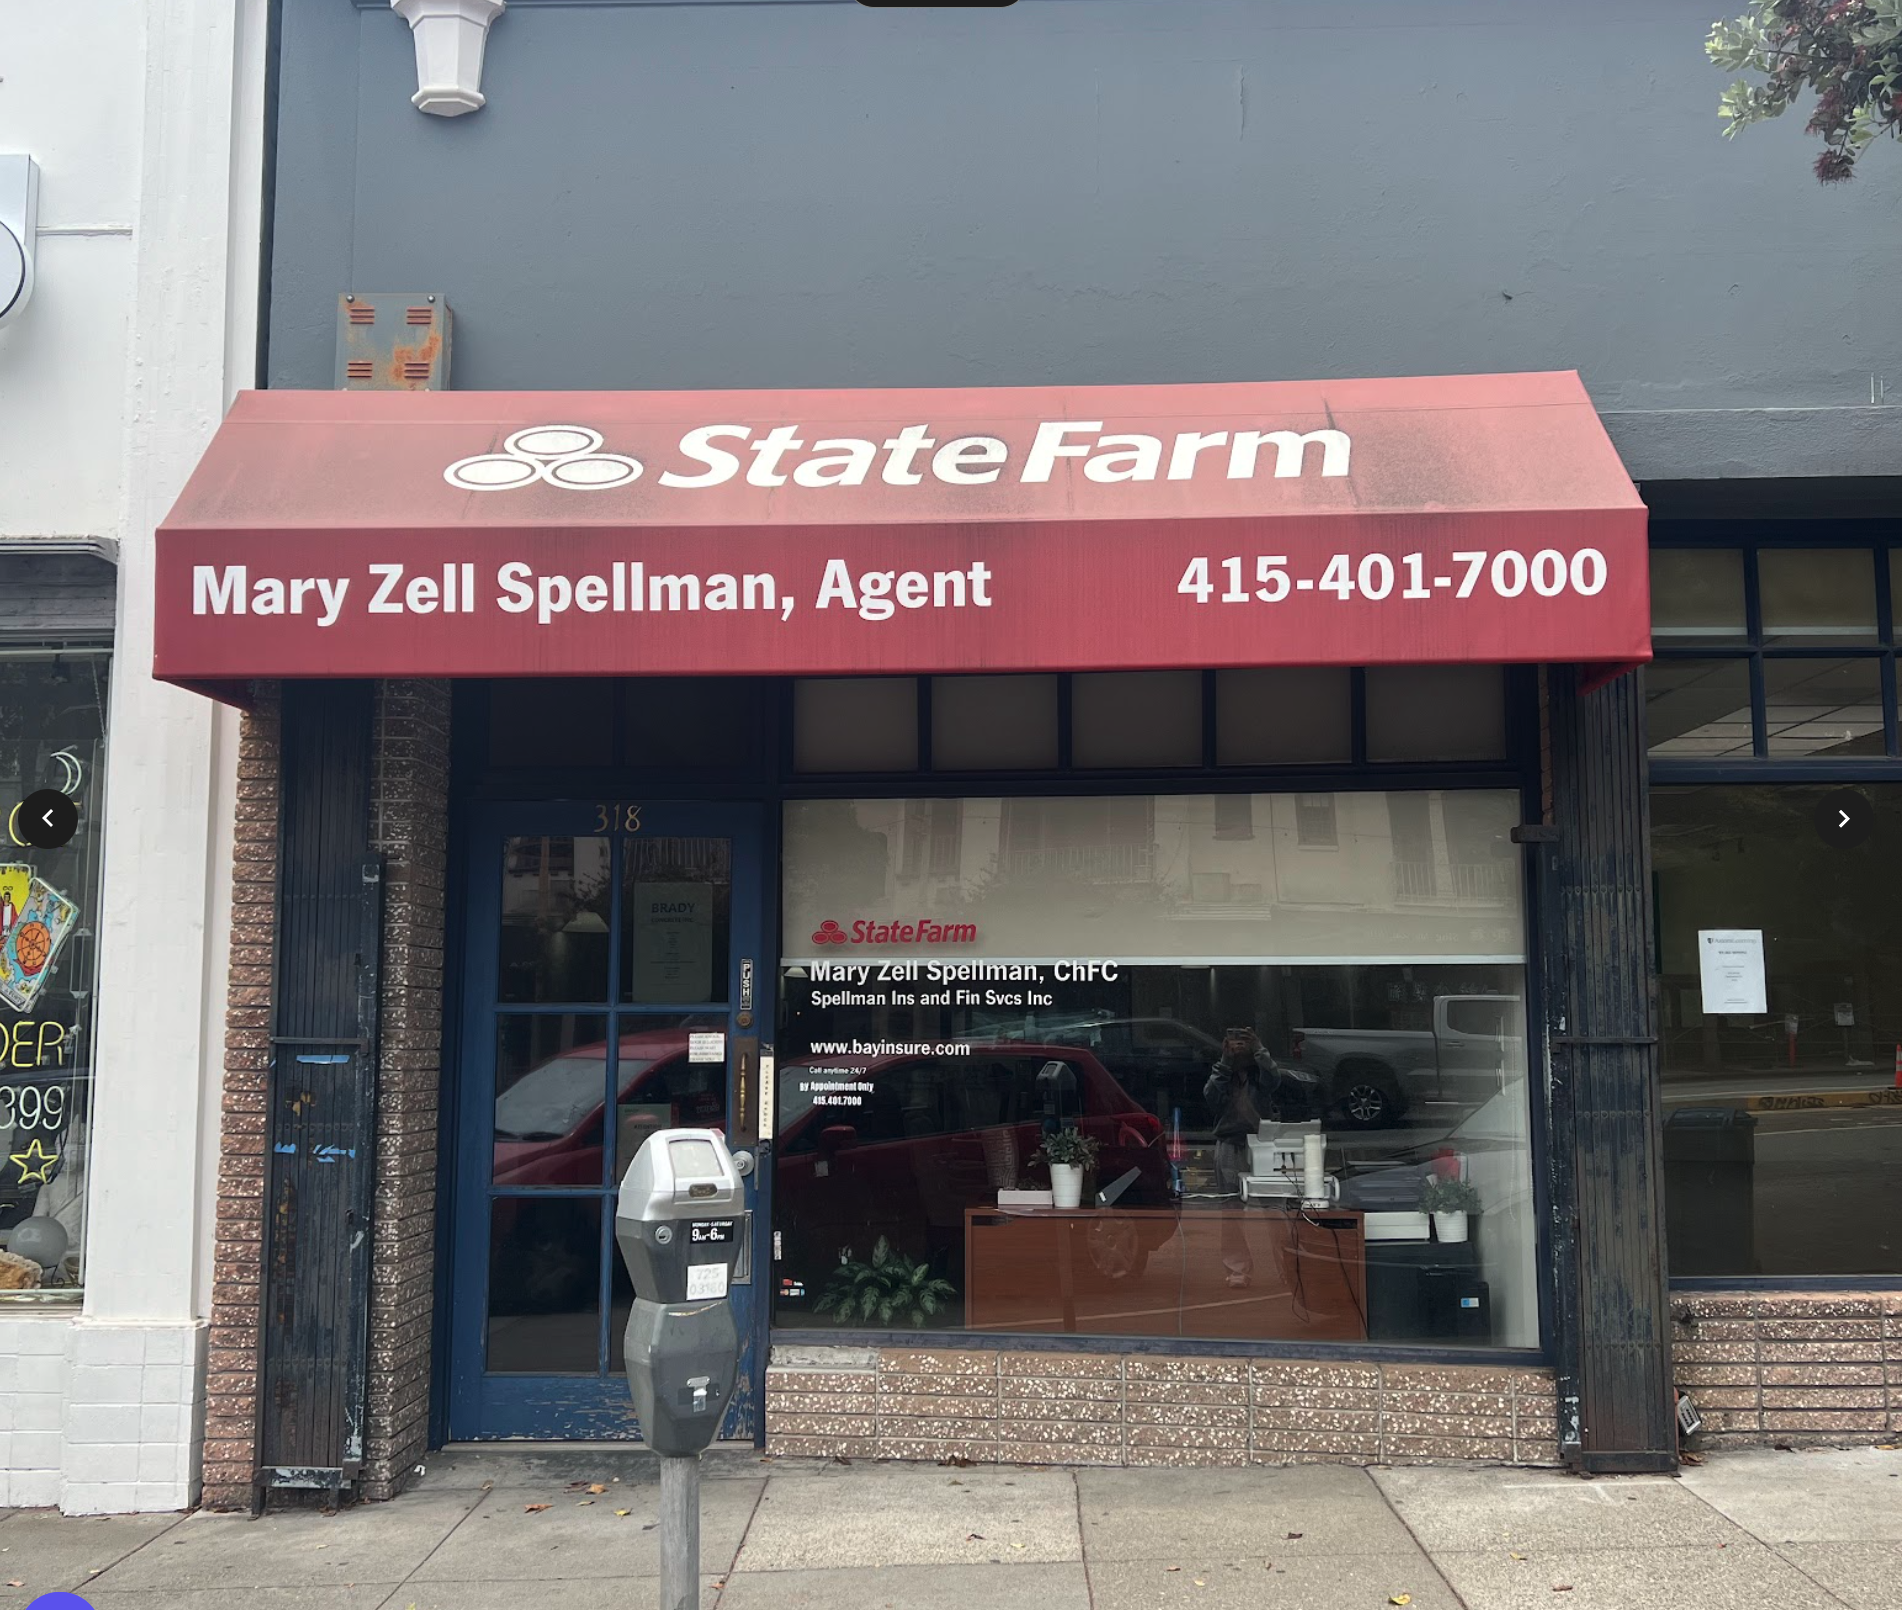 Mary Spellman - State Farm Insurance Agent